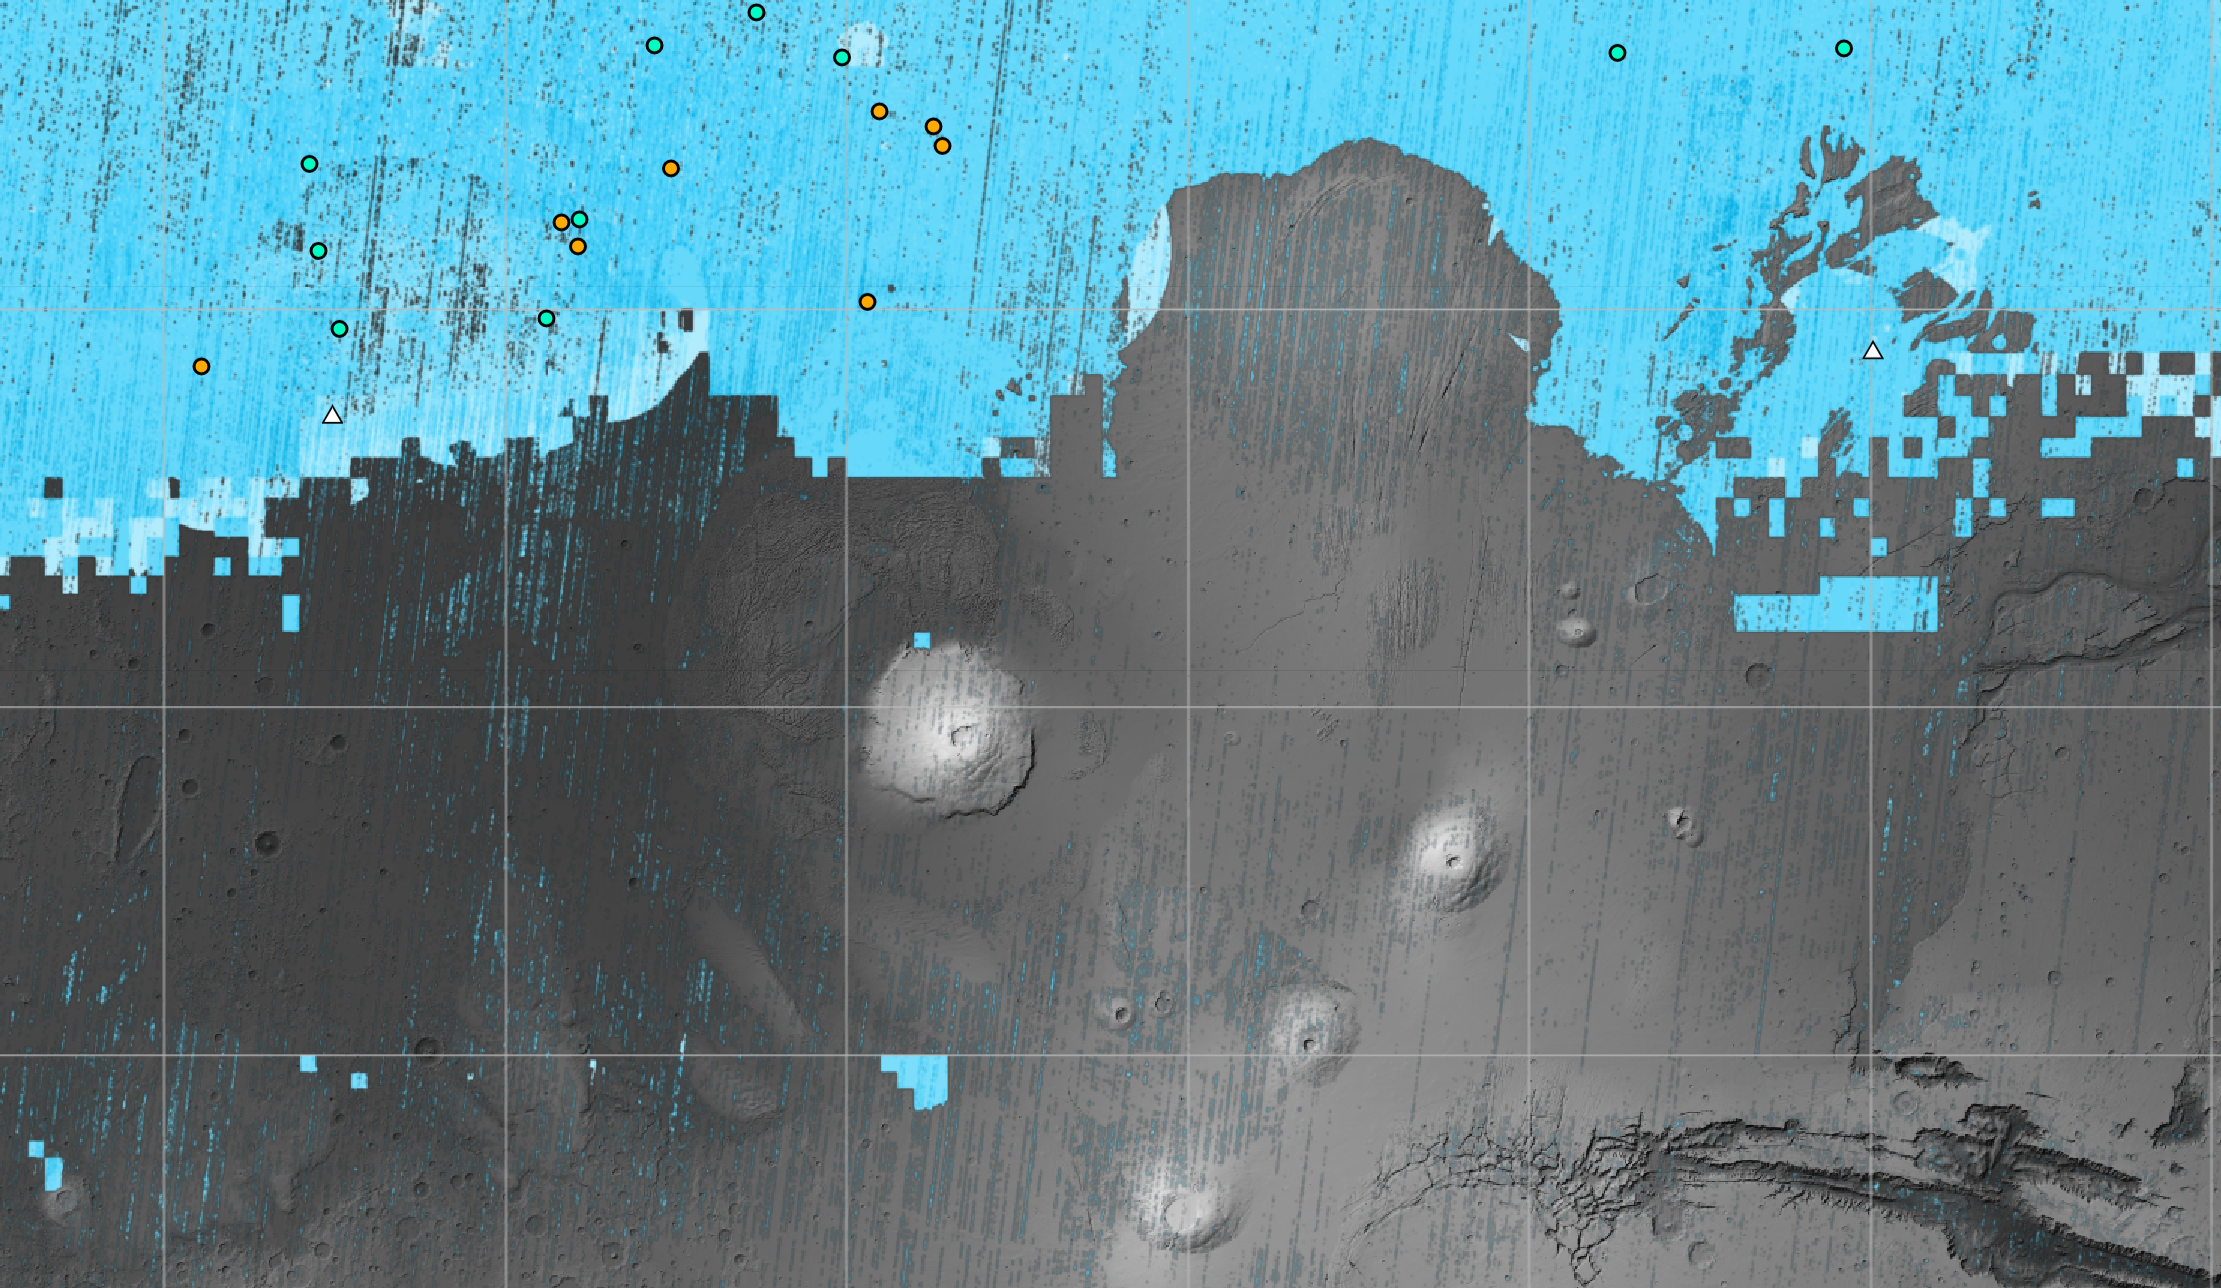 NASA locates ice on Mars using this new map